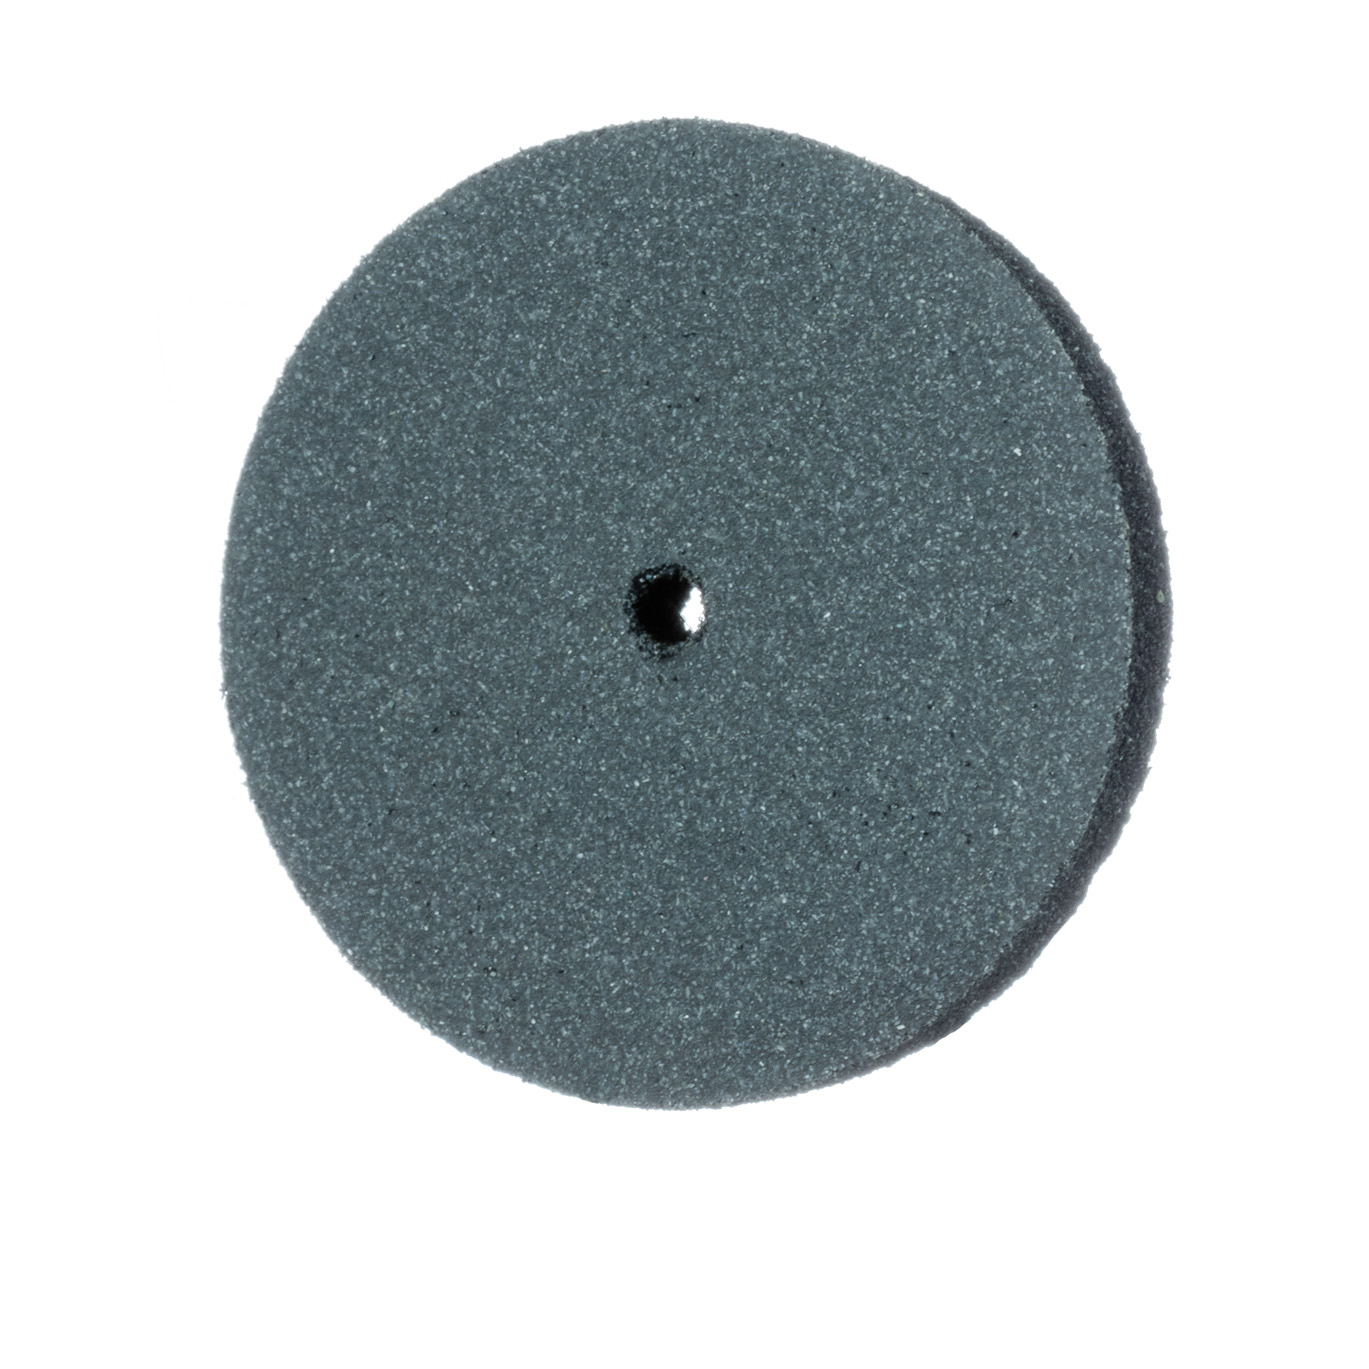 9581P-220-UNM-GREY Polisher, For Acrylics, Grey, Wheel, 22mm Ø, Polishing, UNM